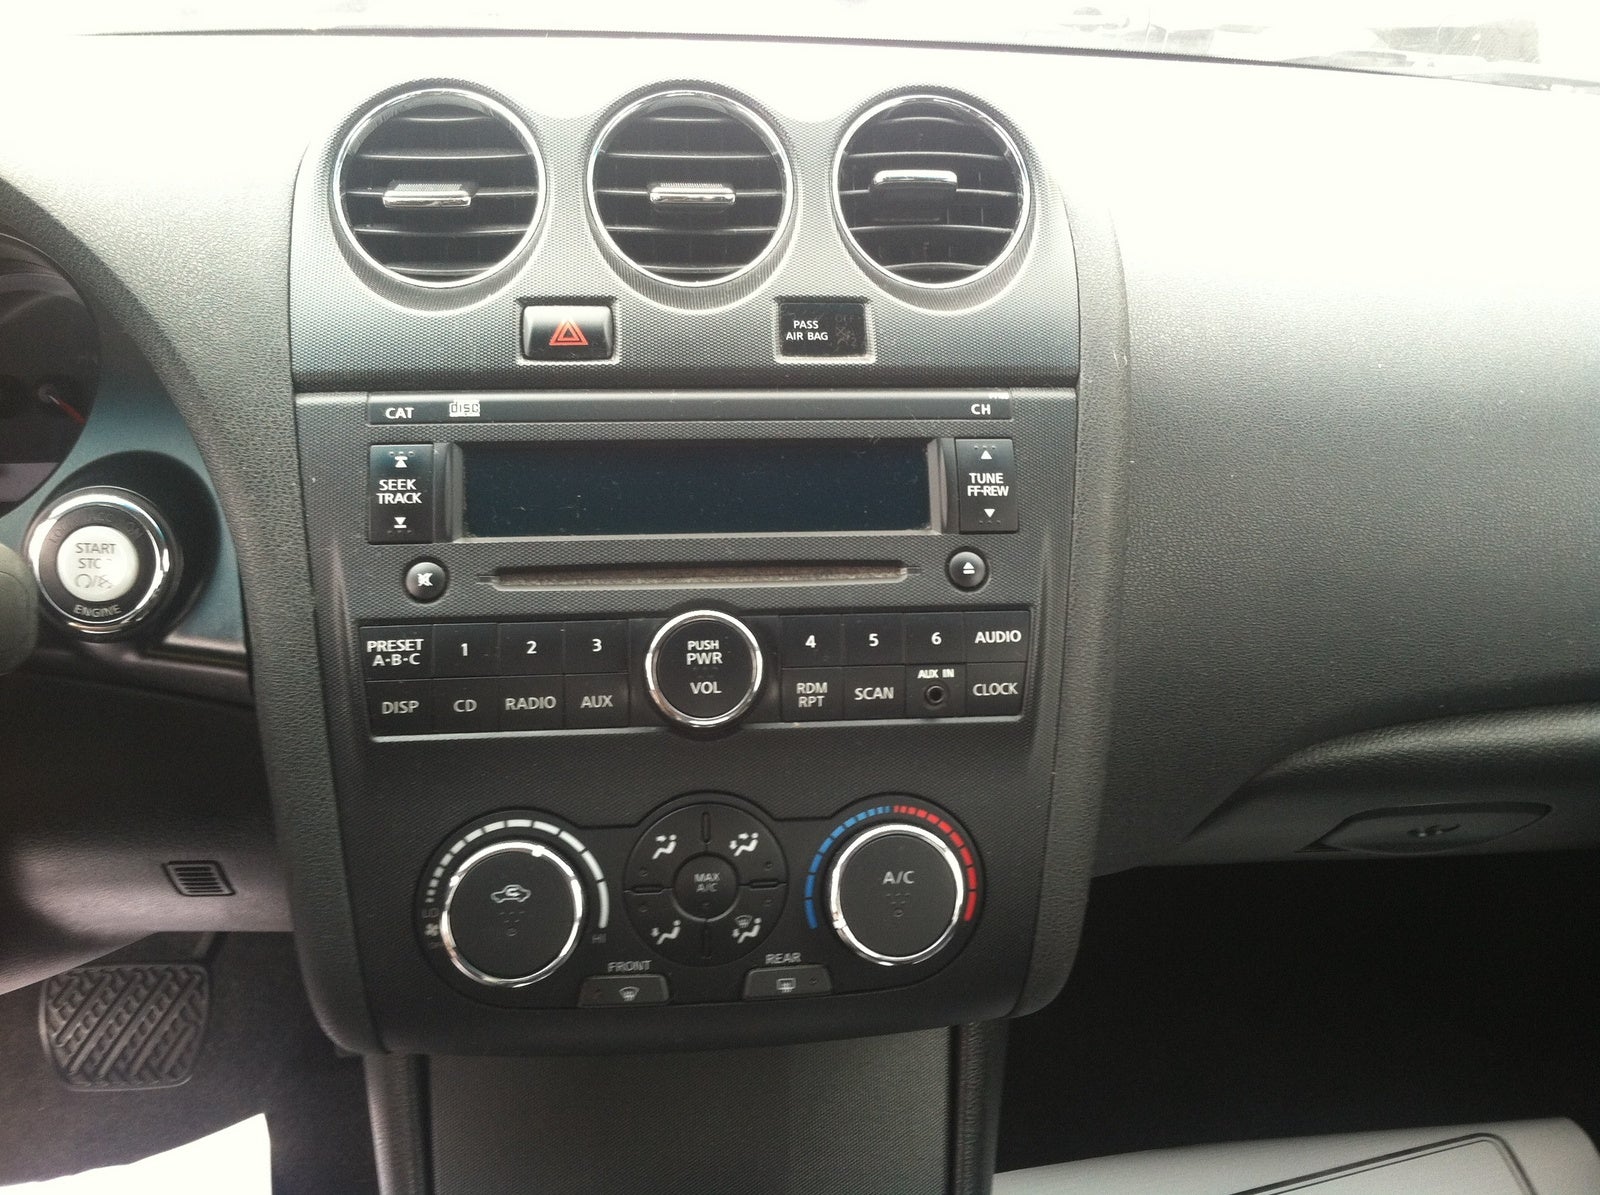 2008 Nissan altima coupe navigation system #1